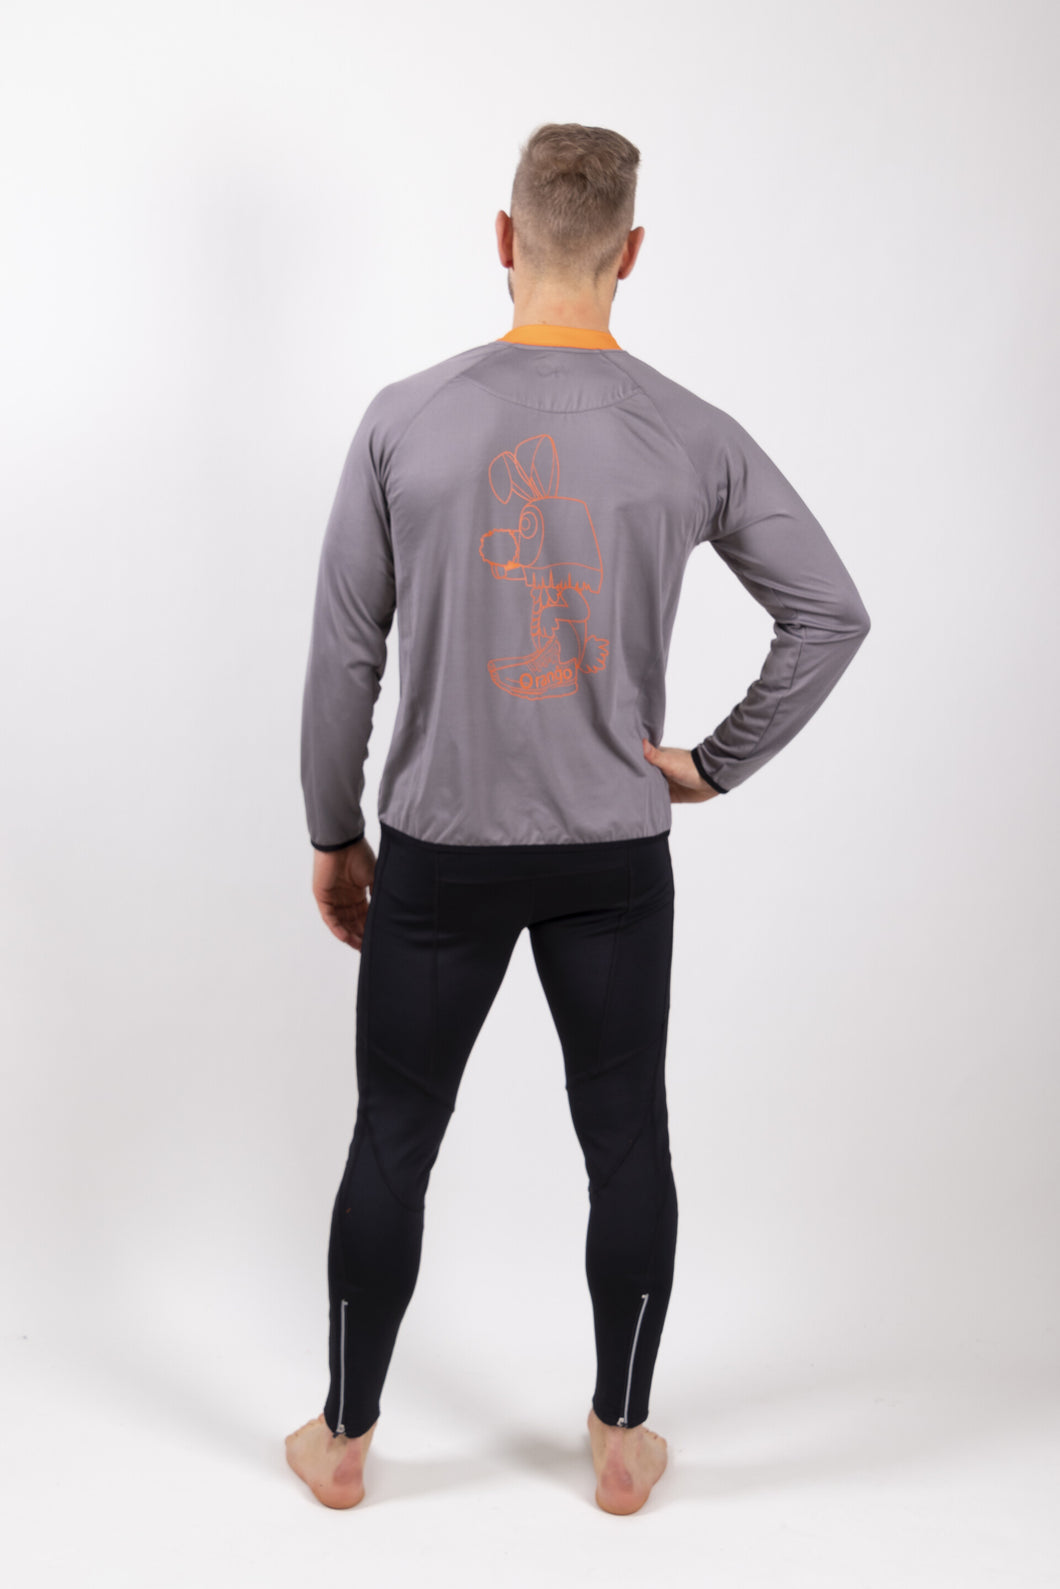 Orango Running - Mens T-shirt long sleeve - Steel Grey/Orange/Black - Print: Zoef - P010-106F